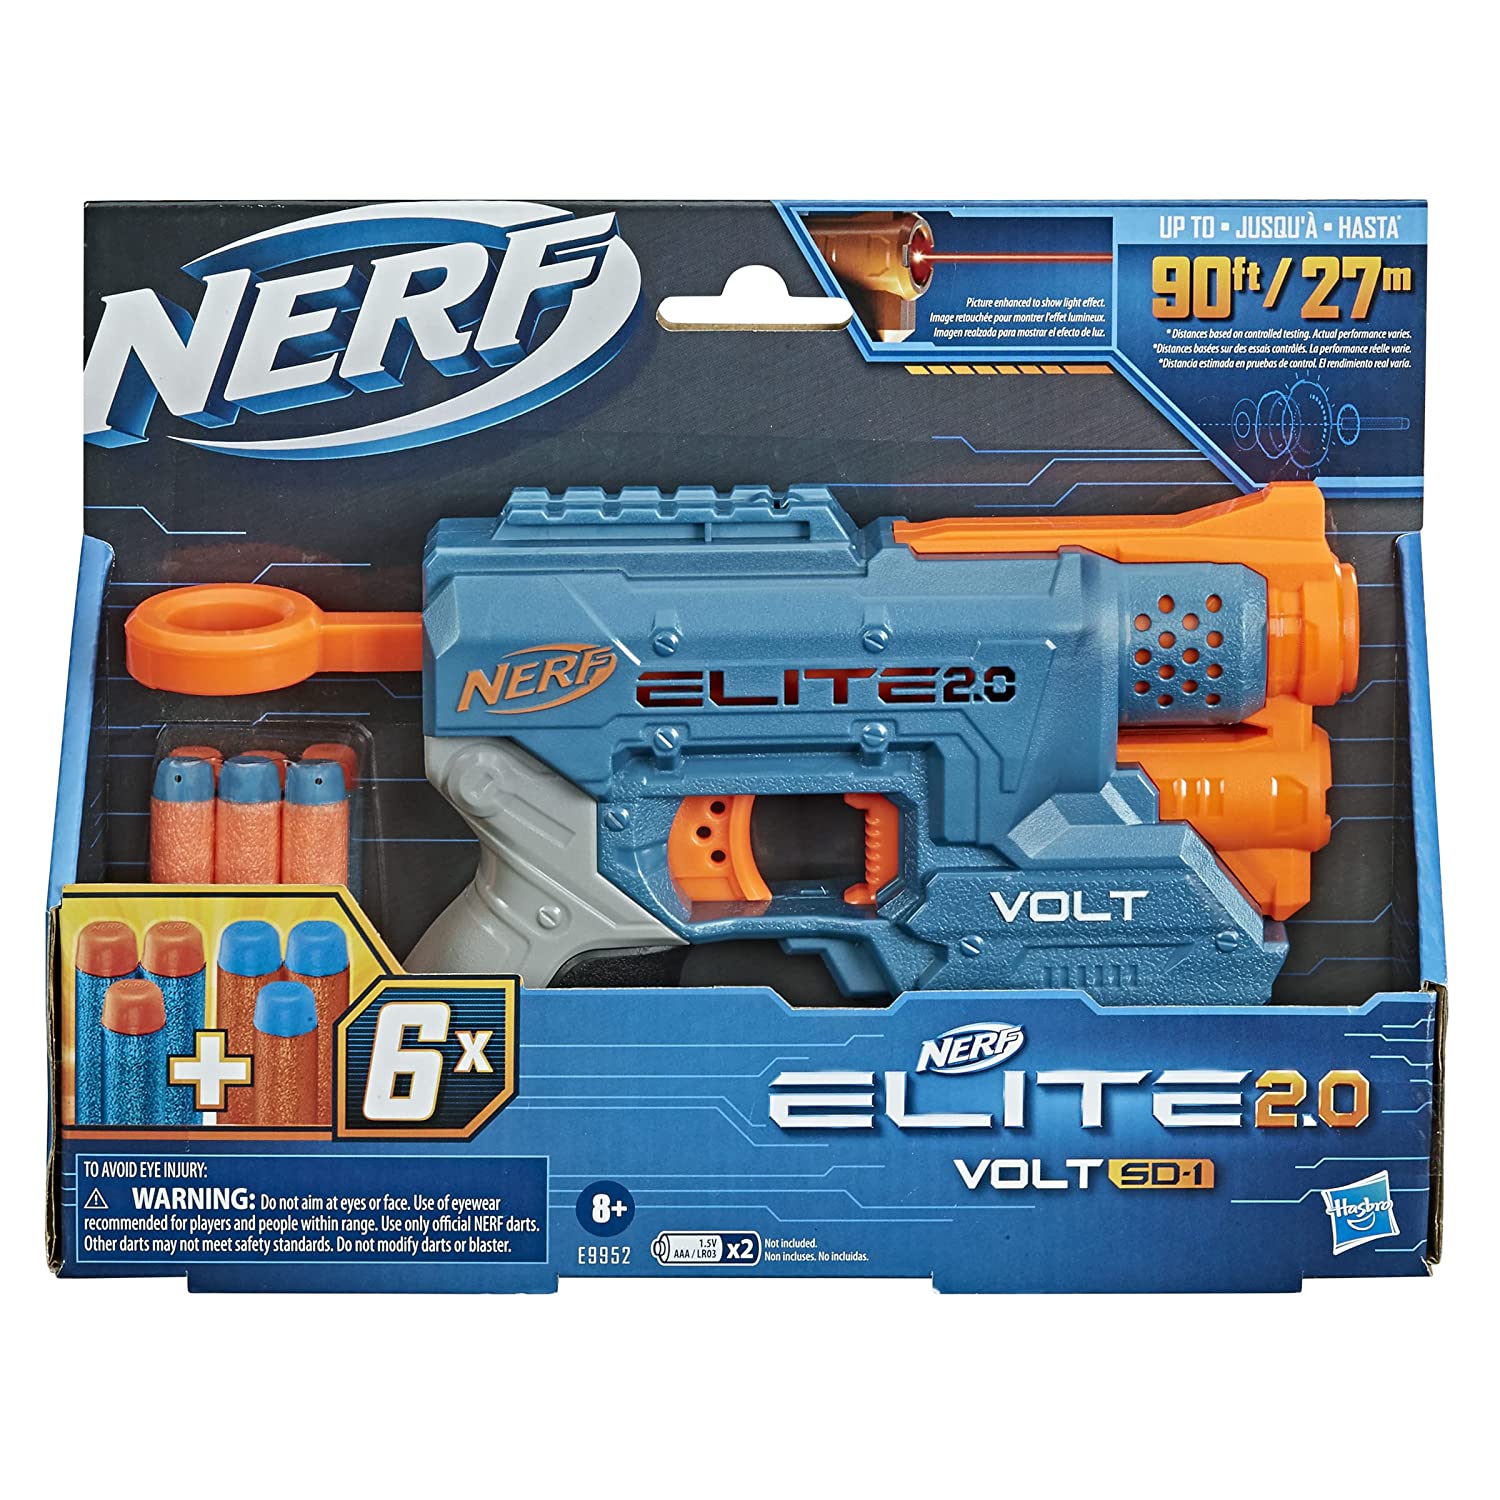 NERF Elite 2.0 Volt Sd-1 Blaster –